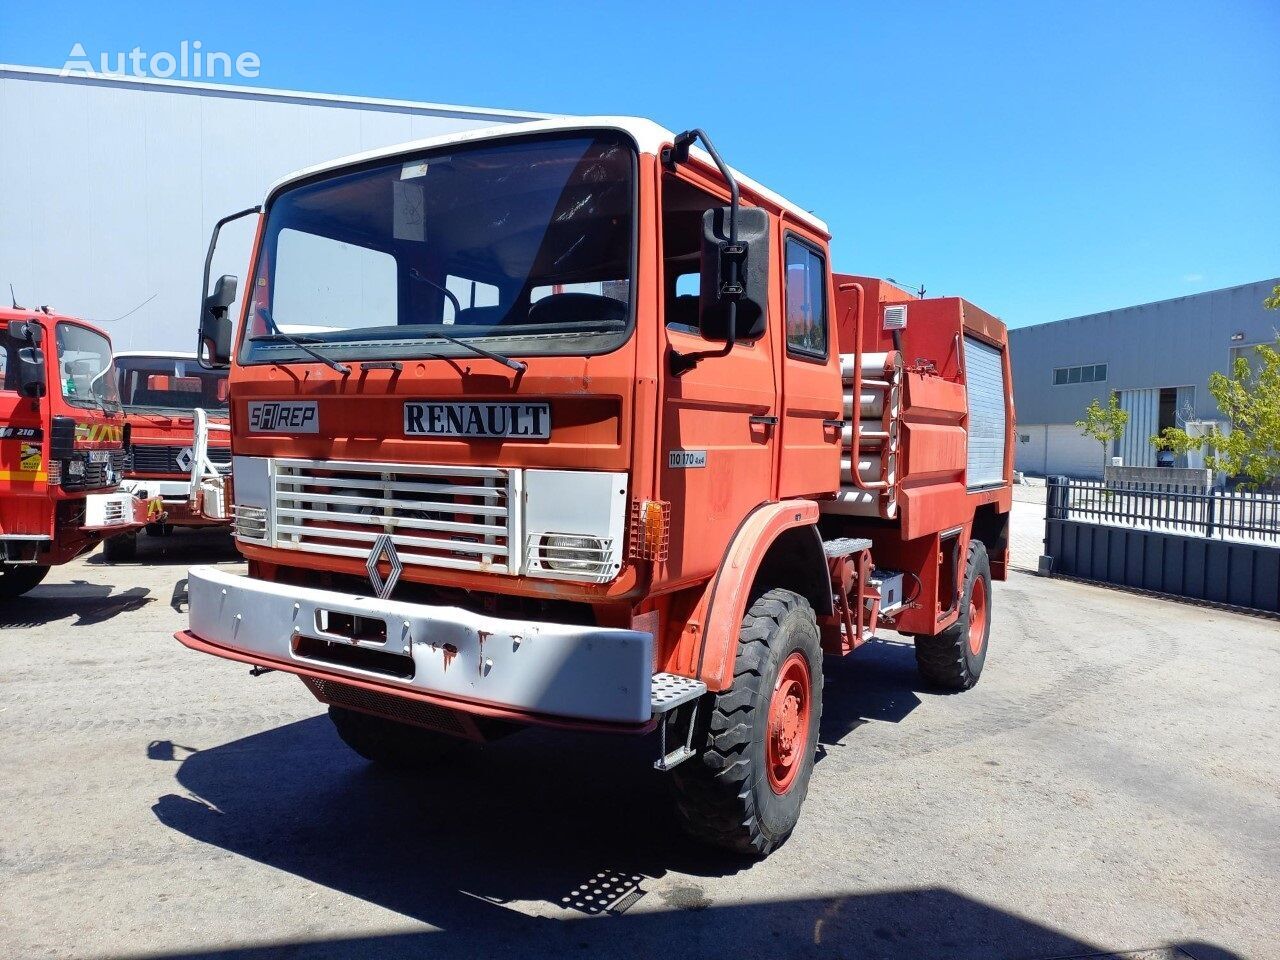 Renault 110.170 fire truck